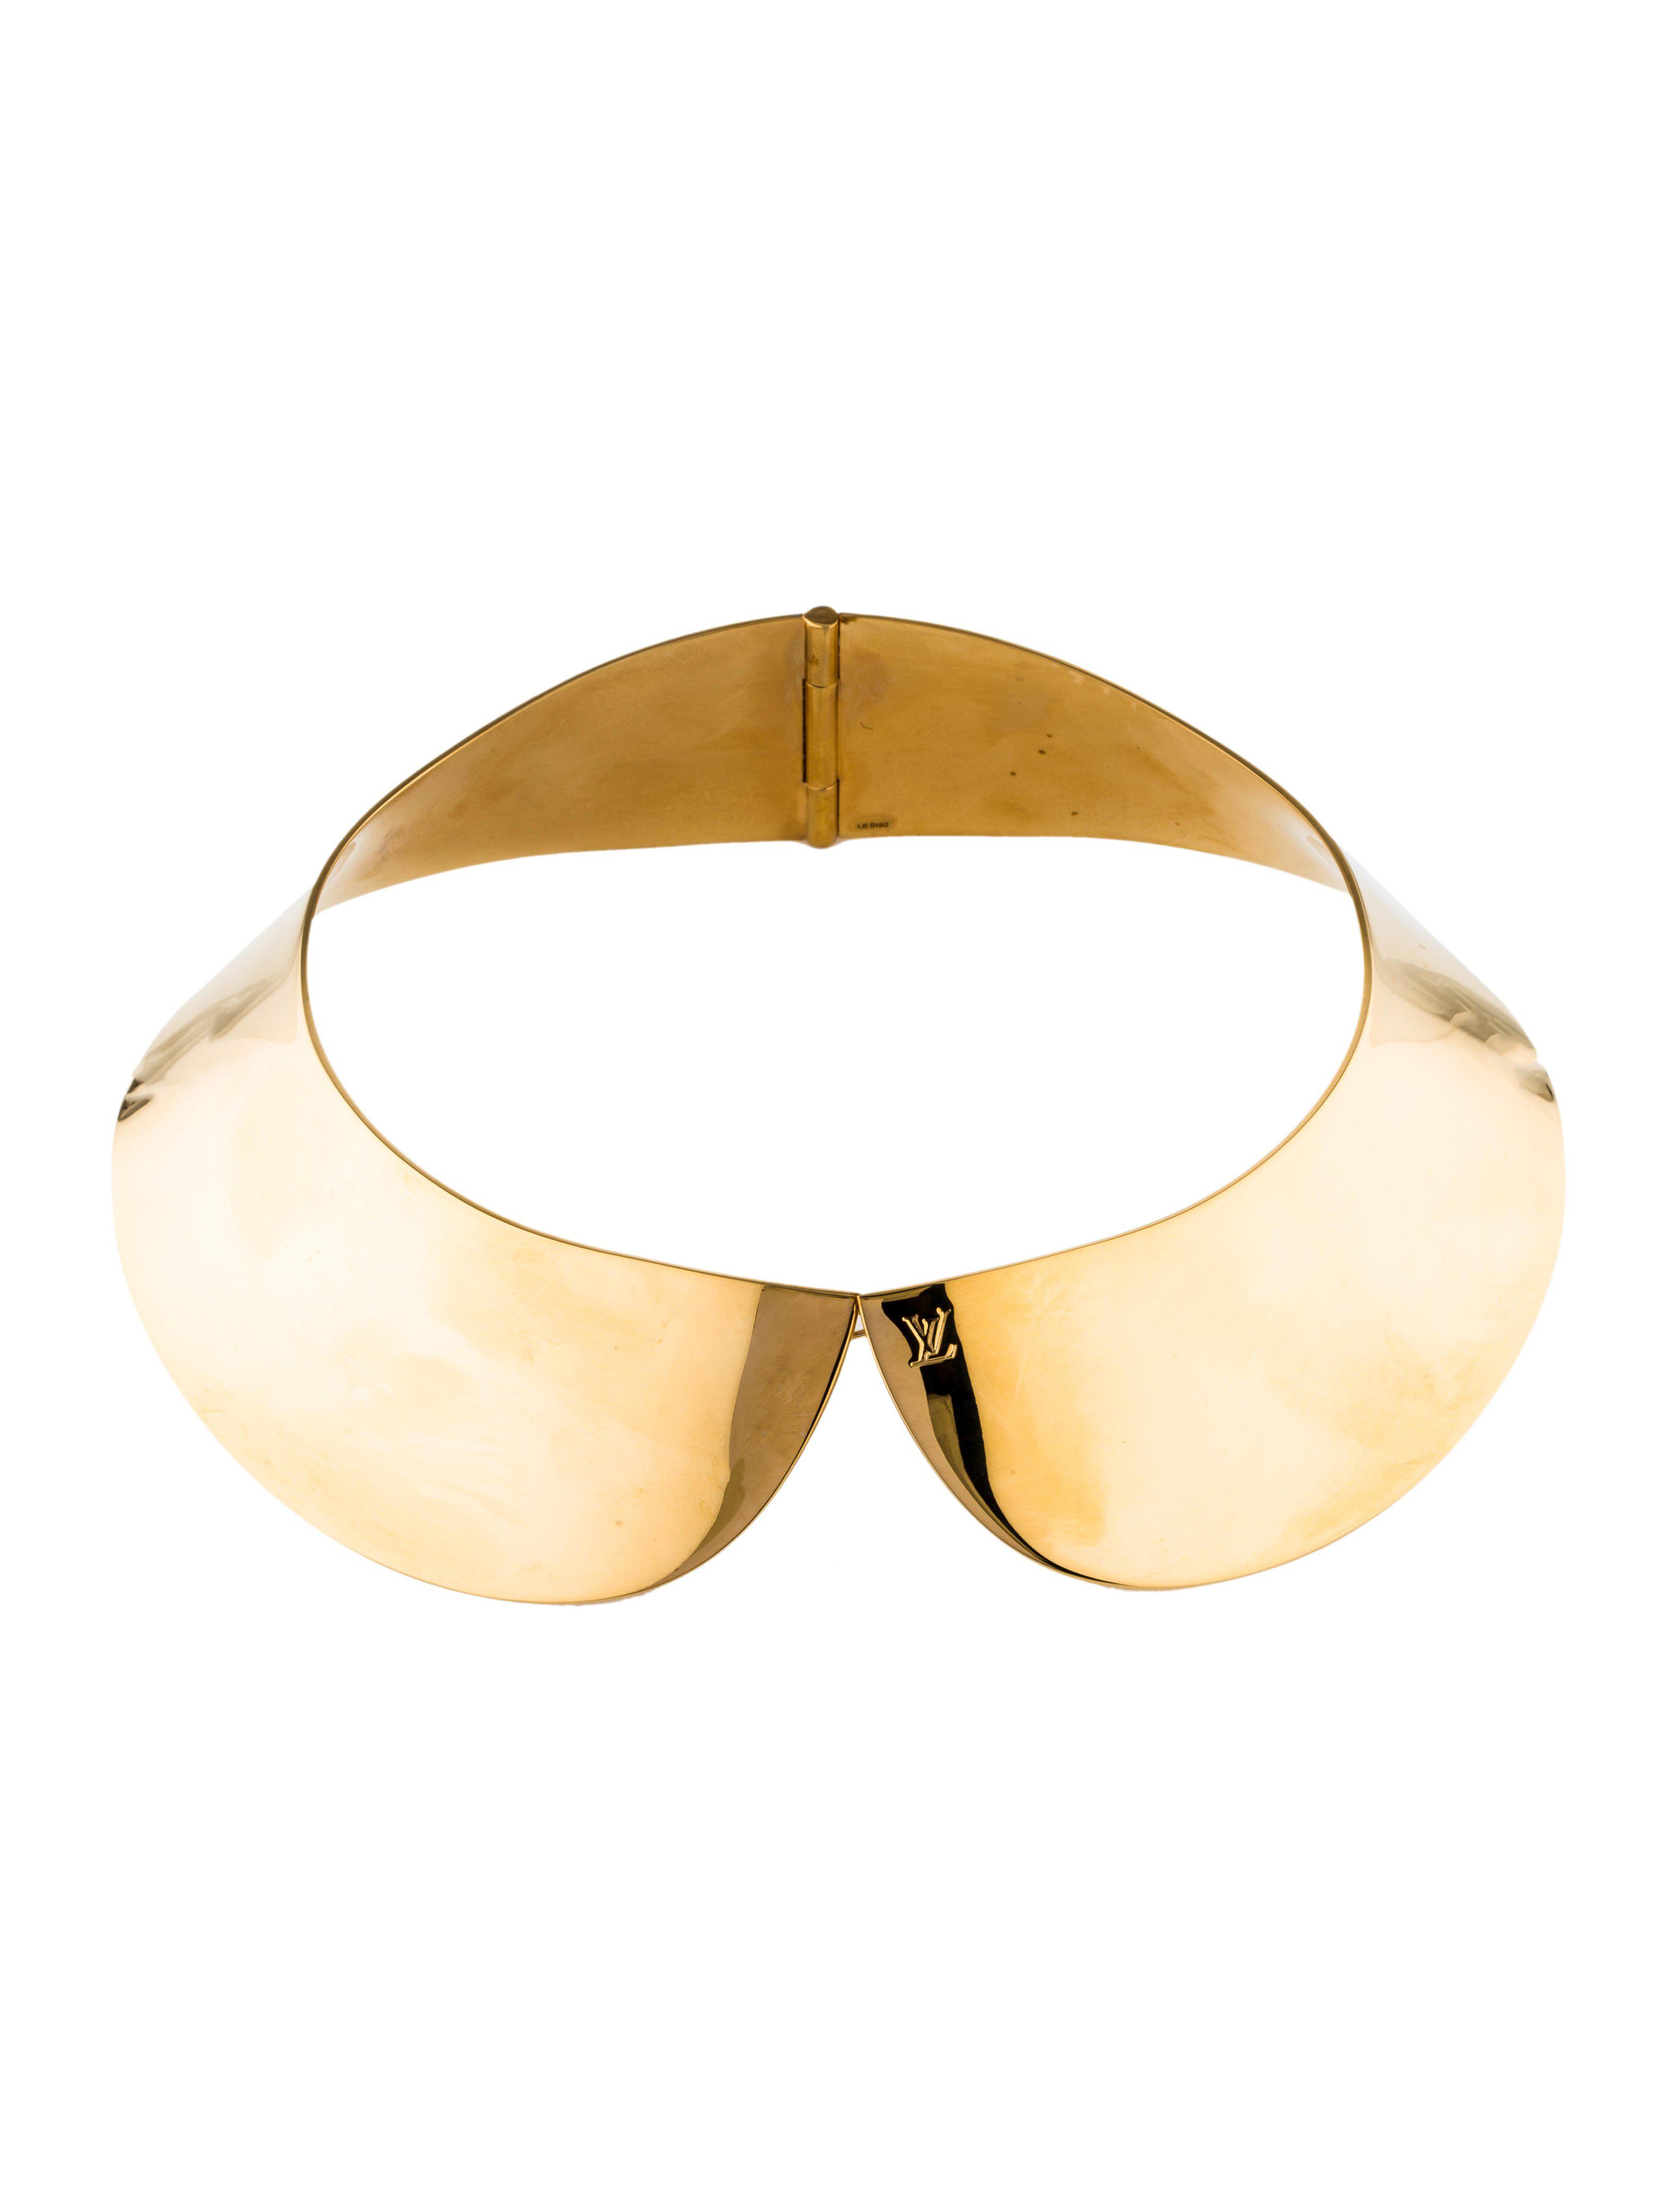 Lyst - Louis Vuitton Lock Me Collar Necklace Gold in Metallic